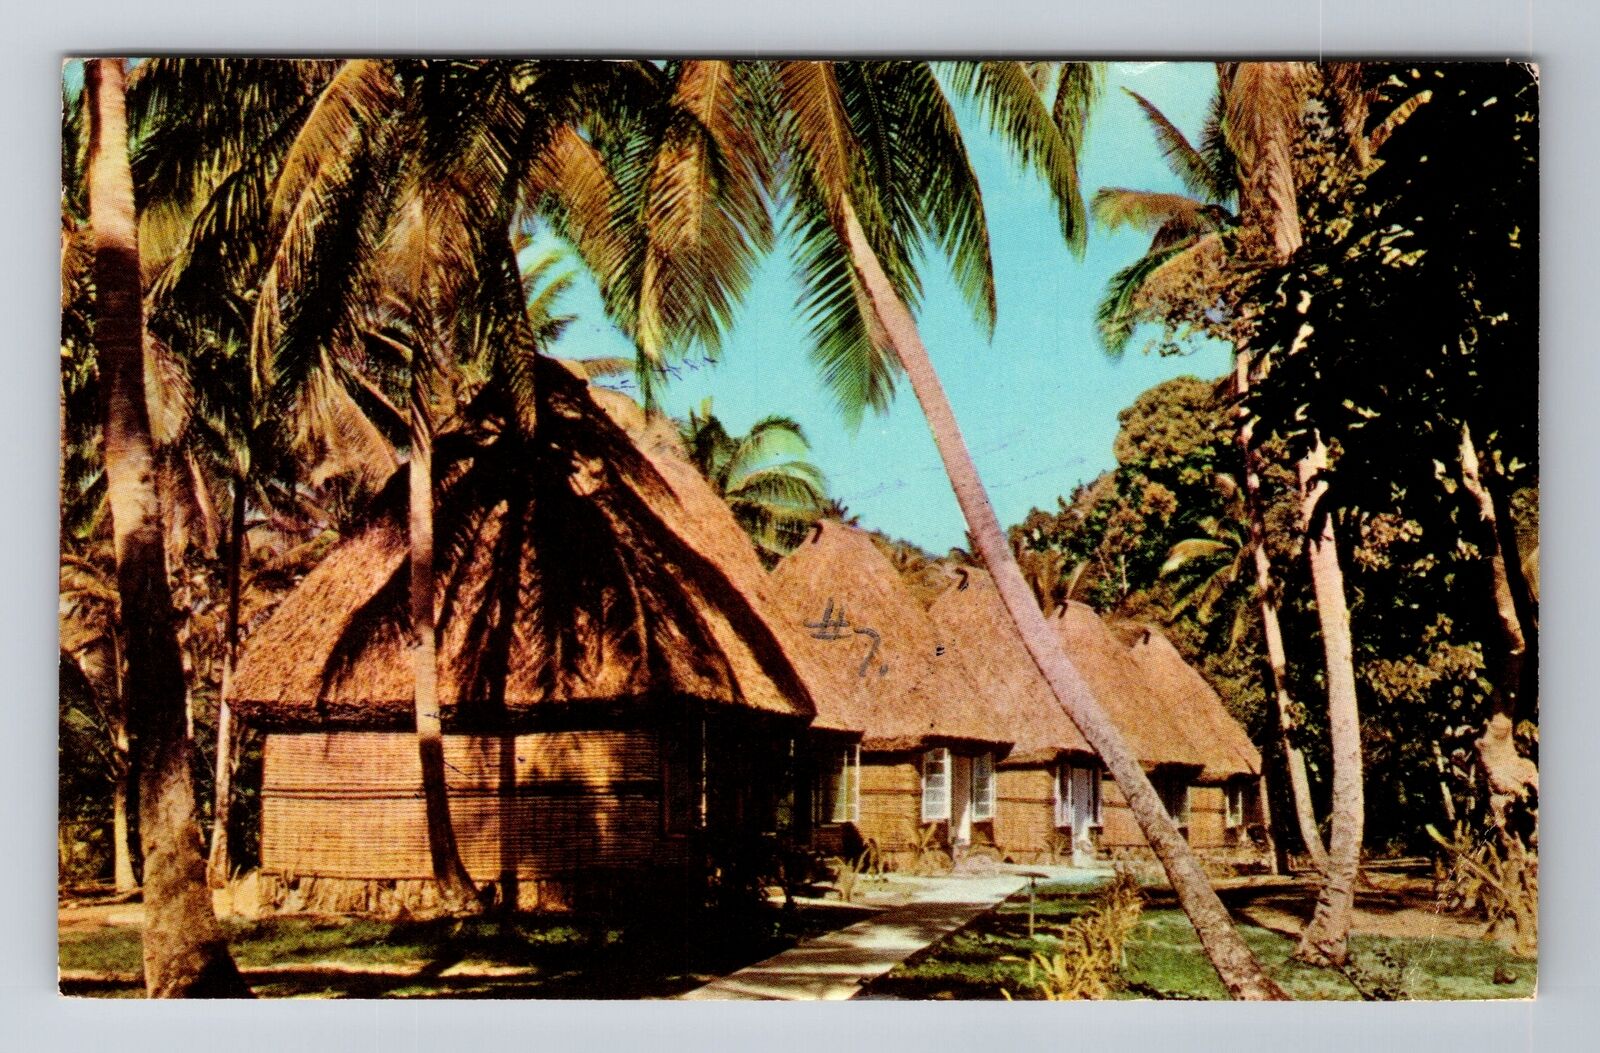 Korolevu Fiji, Bure Accommodation, Antique, Vintage Postcard